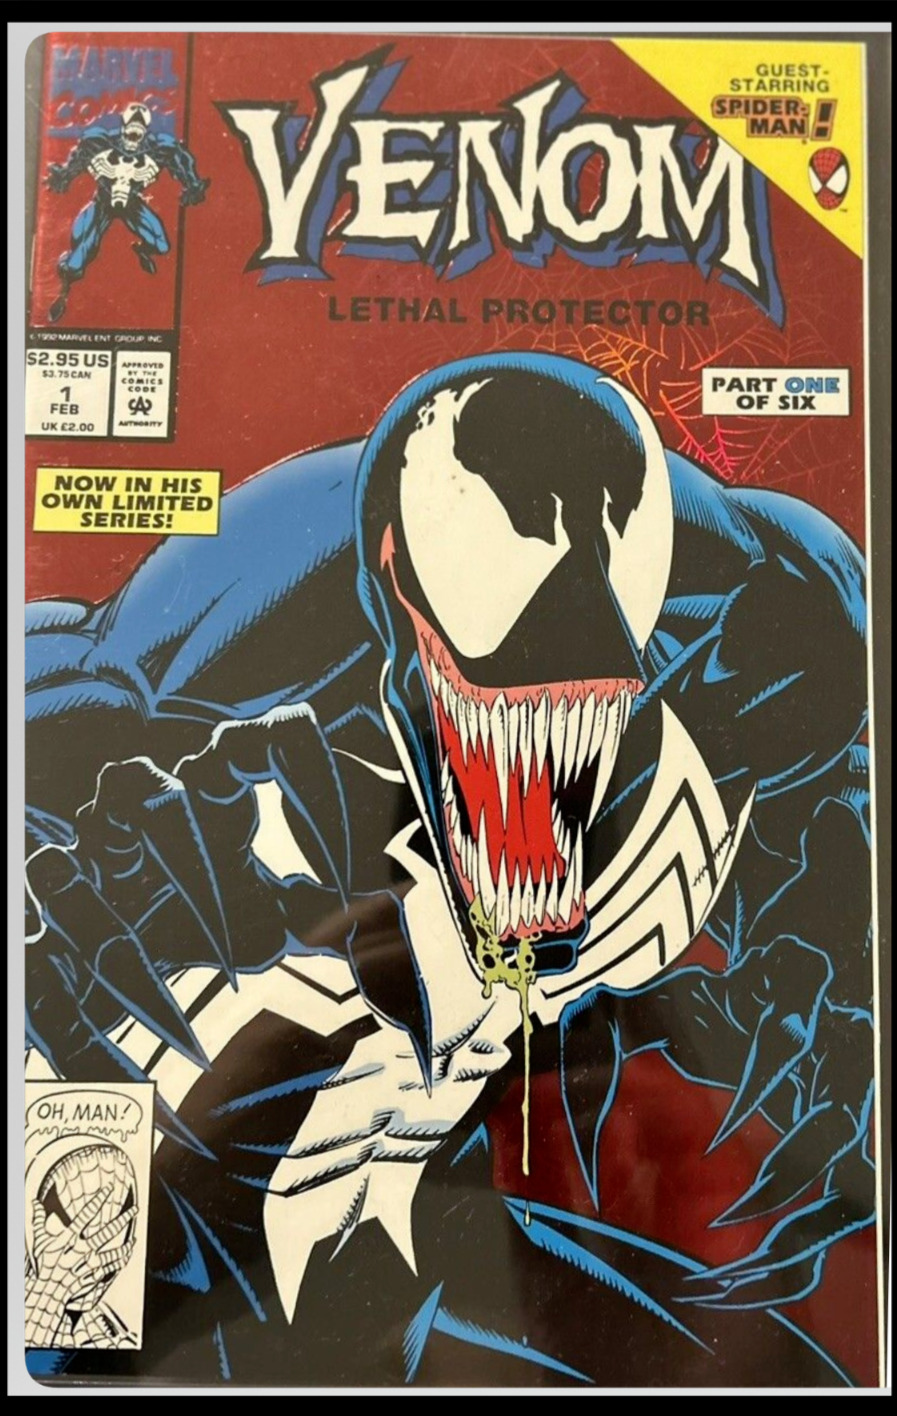 Venom Lethal Protector #1 Feb 1 1993 (9.9)Sealed Light/Temp Controlled Storage